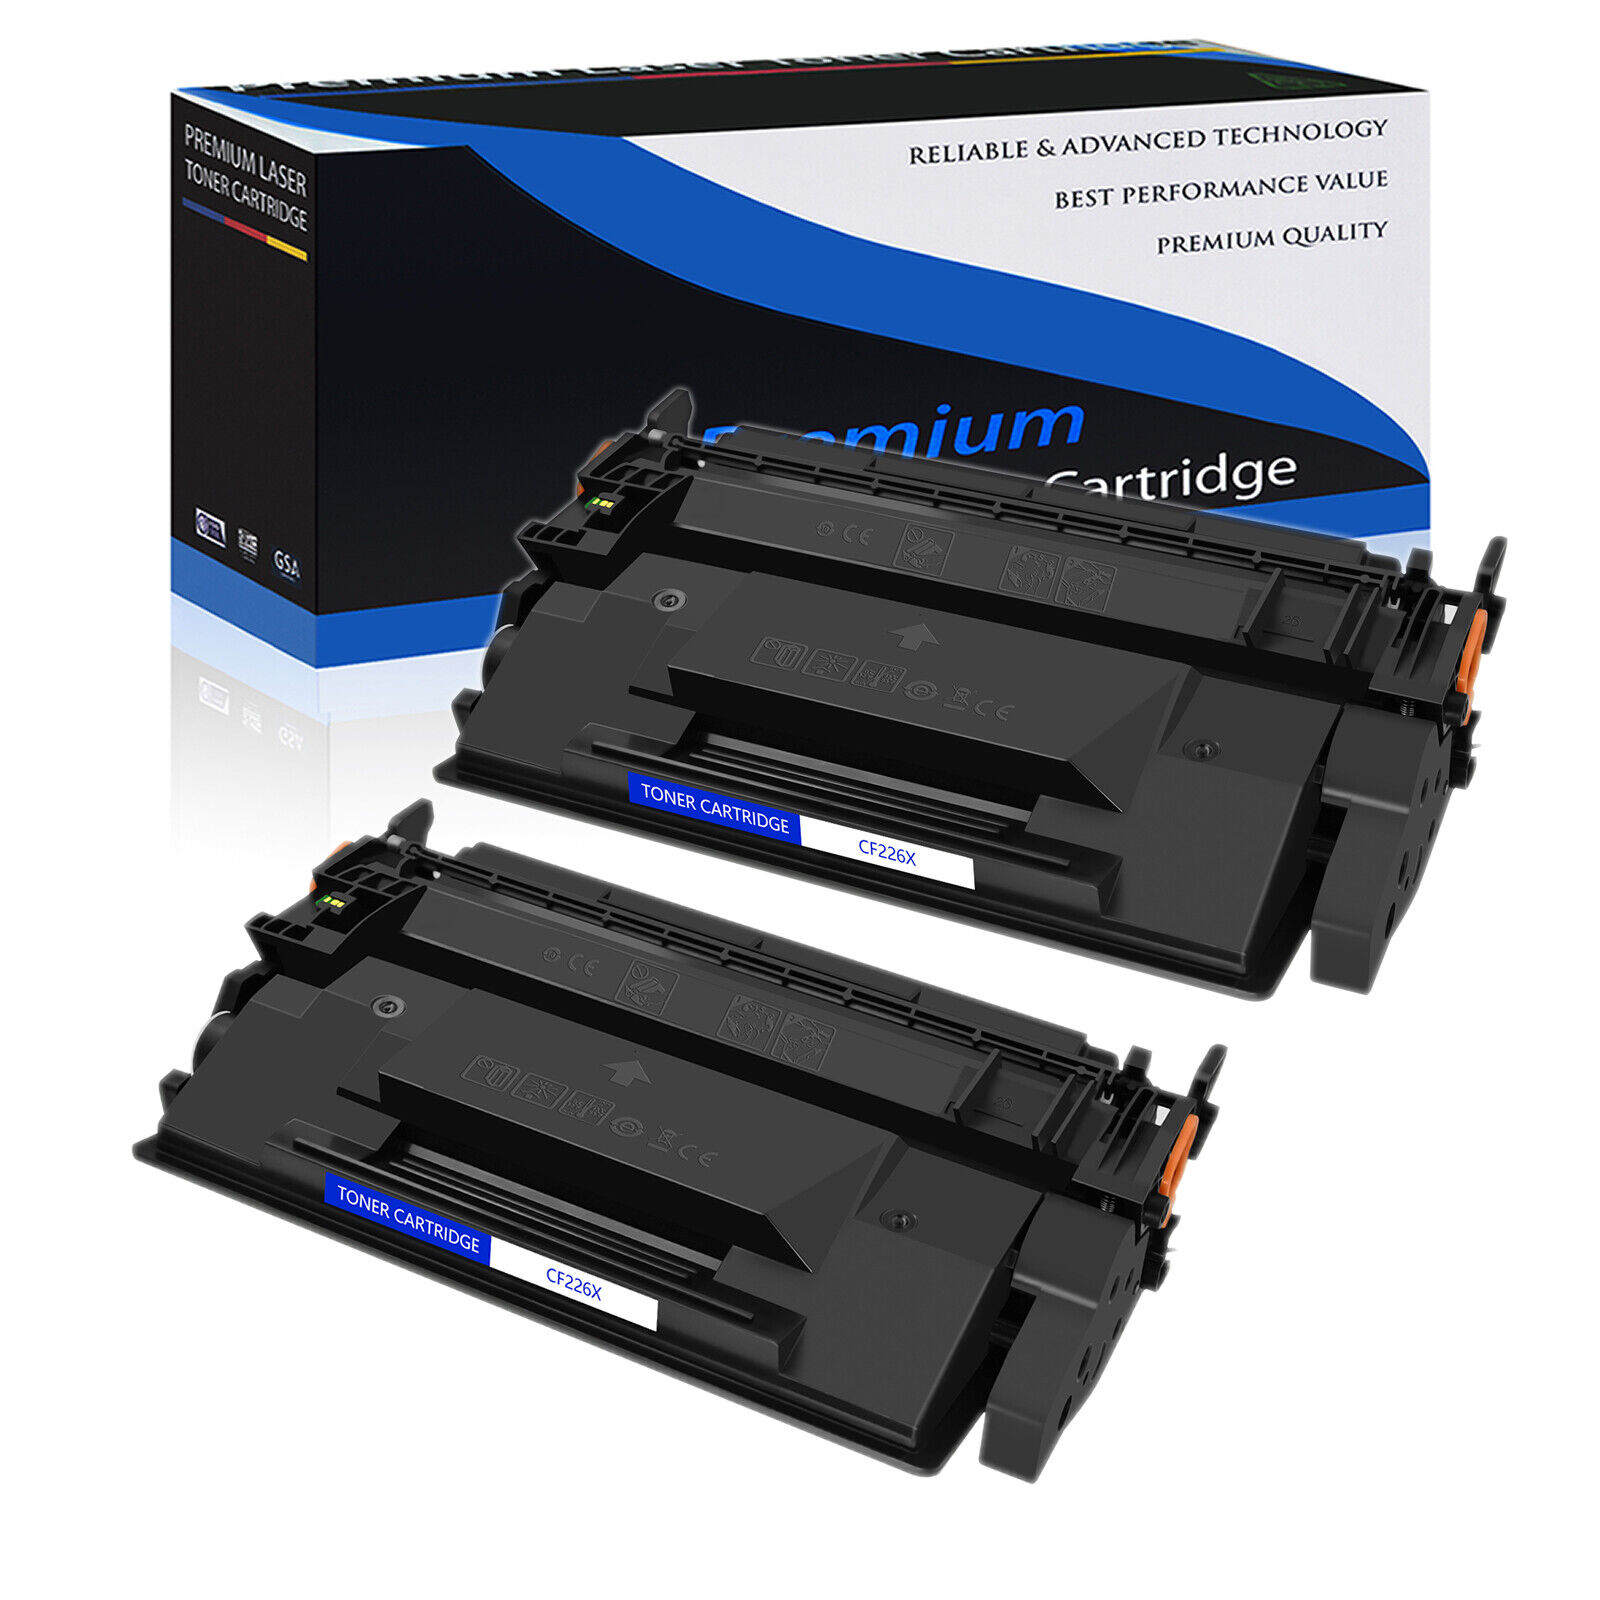 2 PACK CF226X 26X Toner Cartridge Compatible With HPLaserJet Pro M402dw Printer